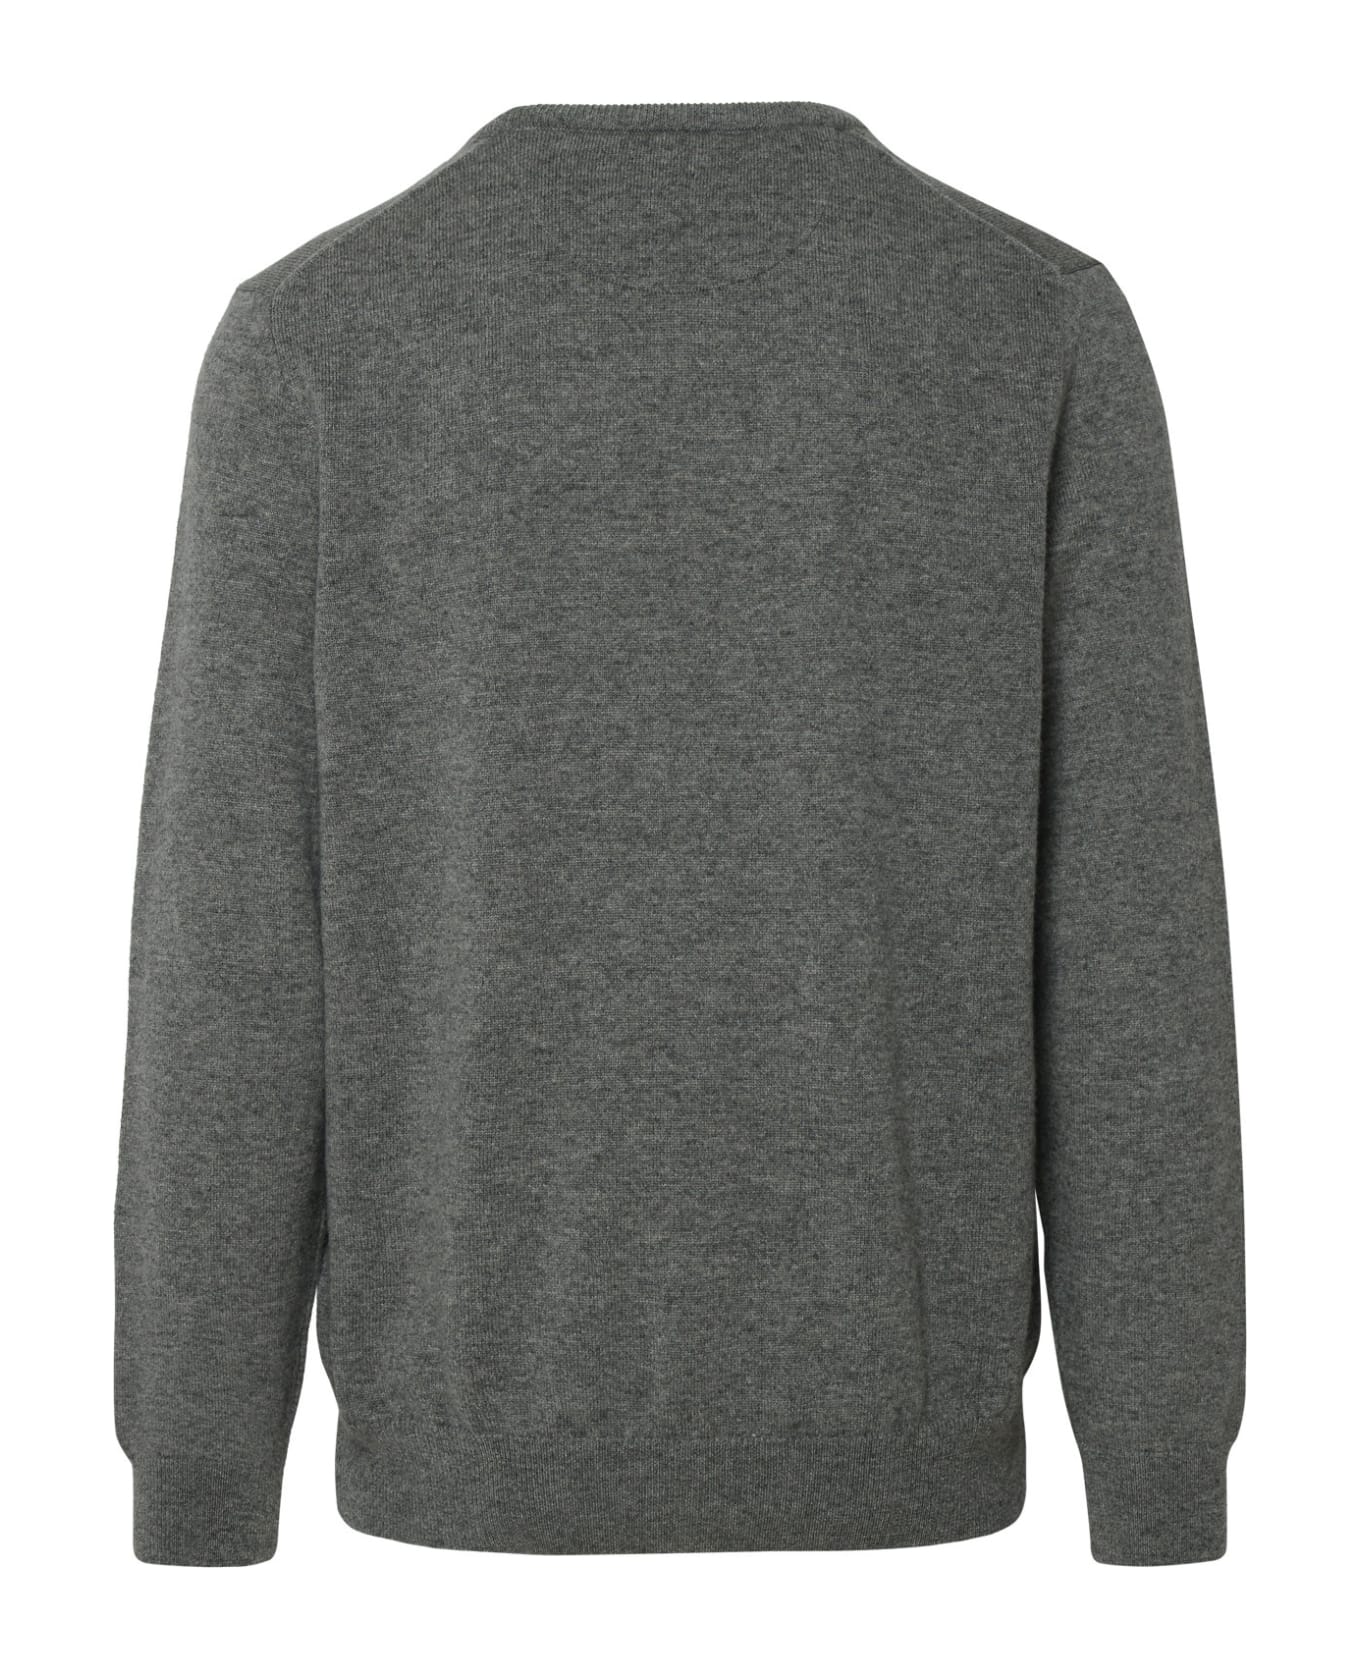 Ralph Lauren Grey Wool Sweater - Grey ニットウェア